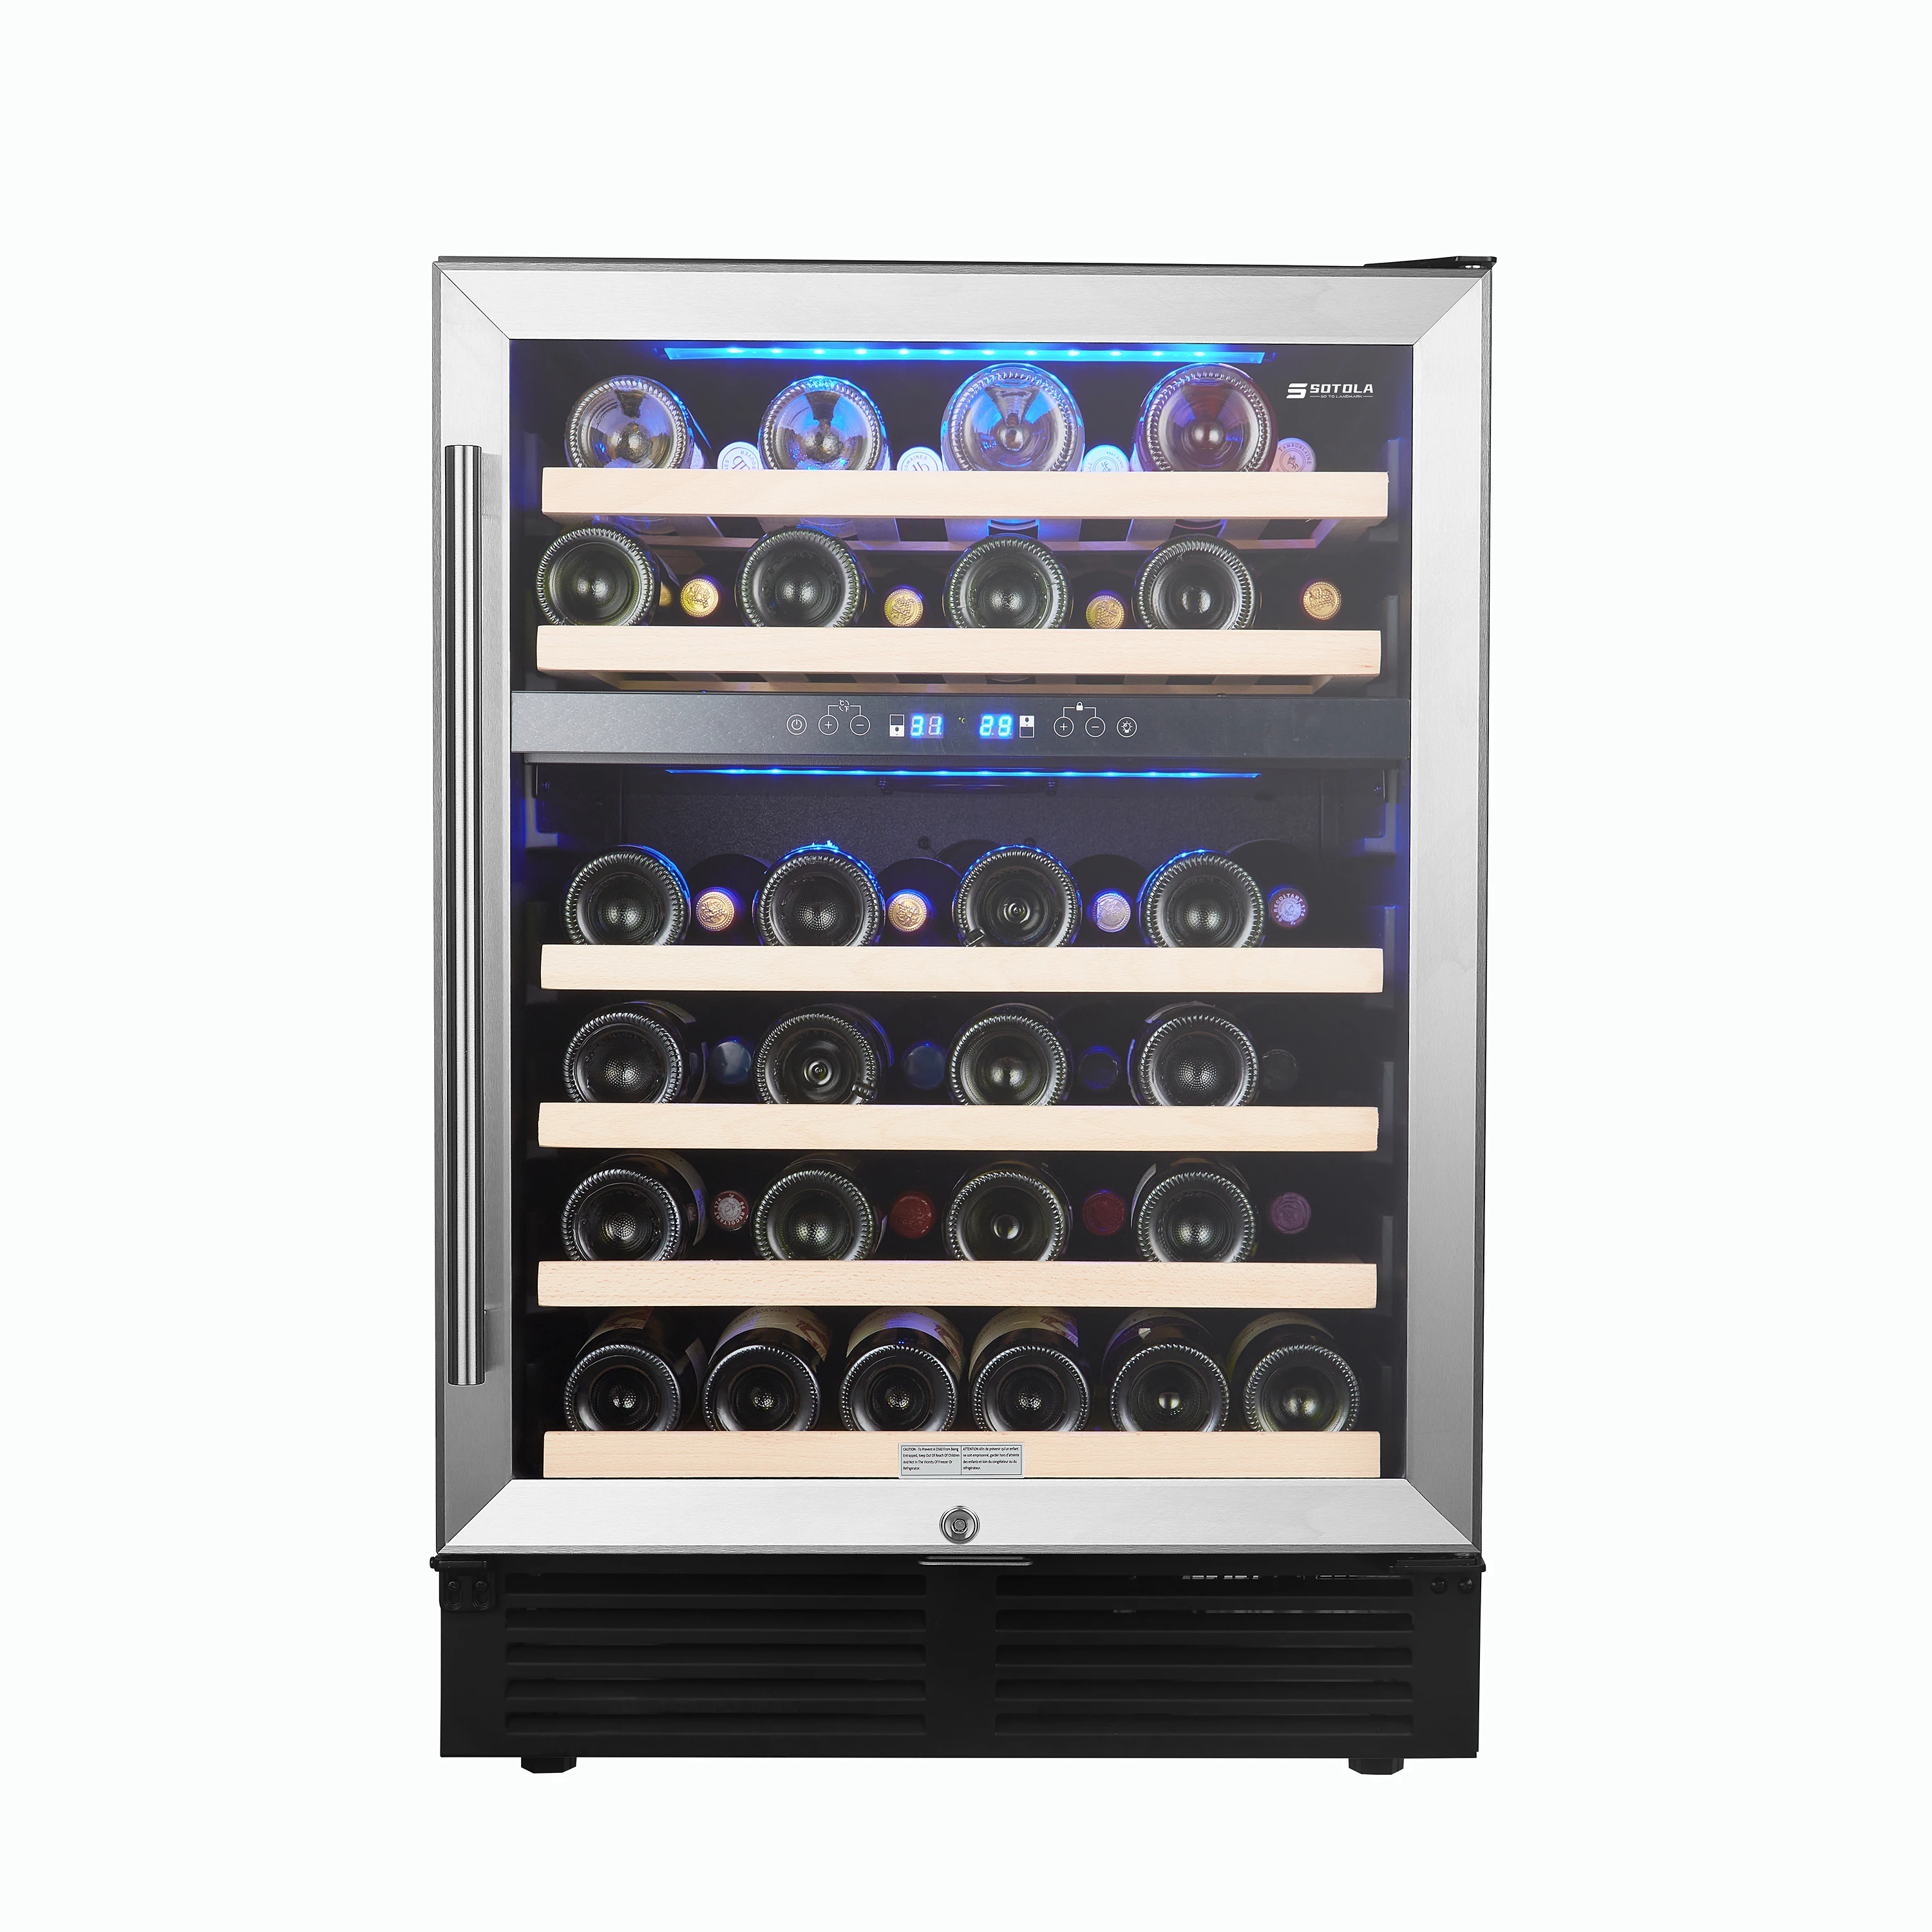 

SOTOLA 24 inch 46 Bottle Wine Cooler Cellar Cabinet Beverage Refrigerator Quiet Operation Compressor Independent Glass Door, Black